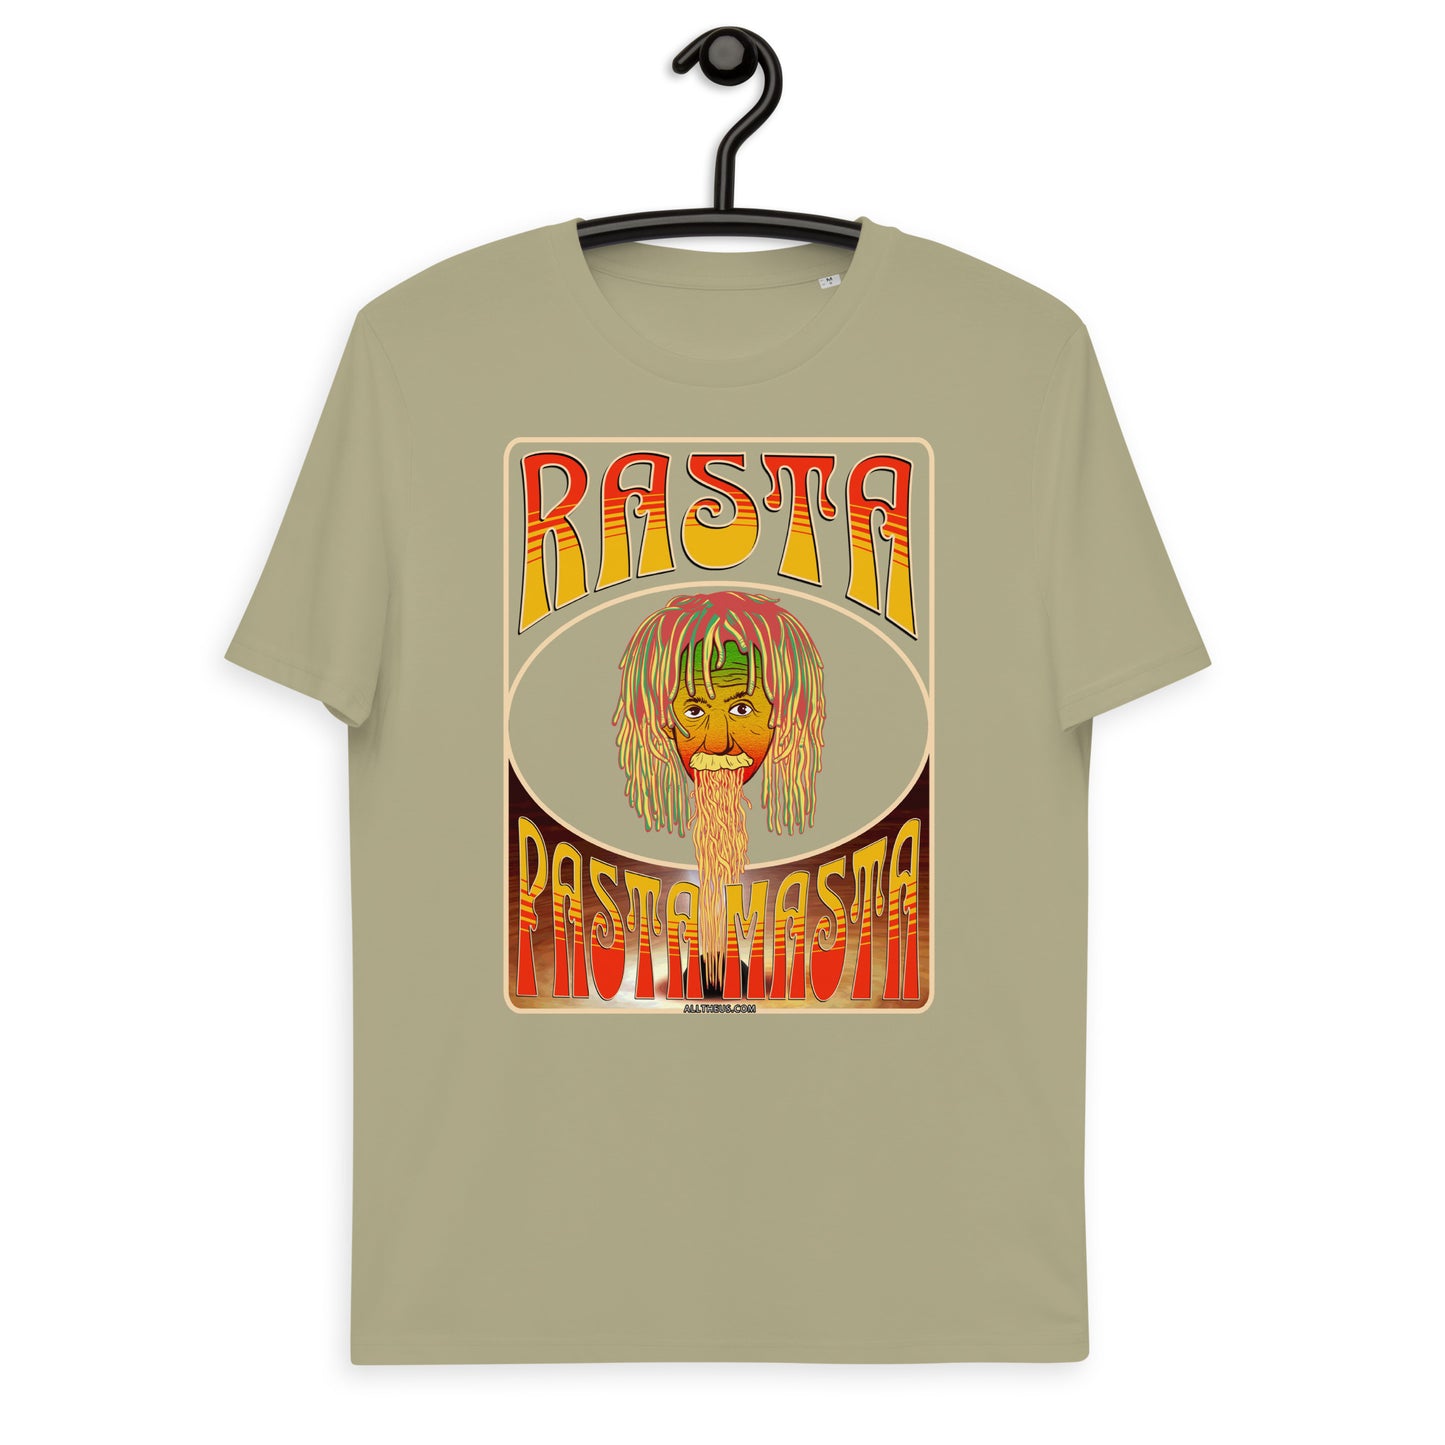 Unisex organic cotton t-shirt - Spaghetti(fication) Served by The Rasta Pasta Masta